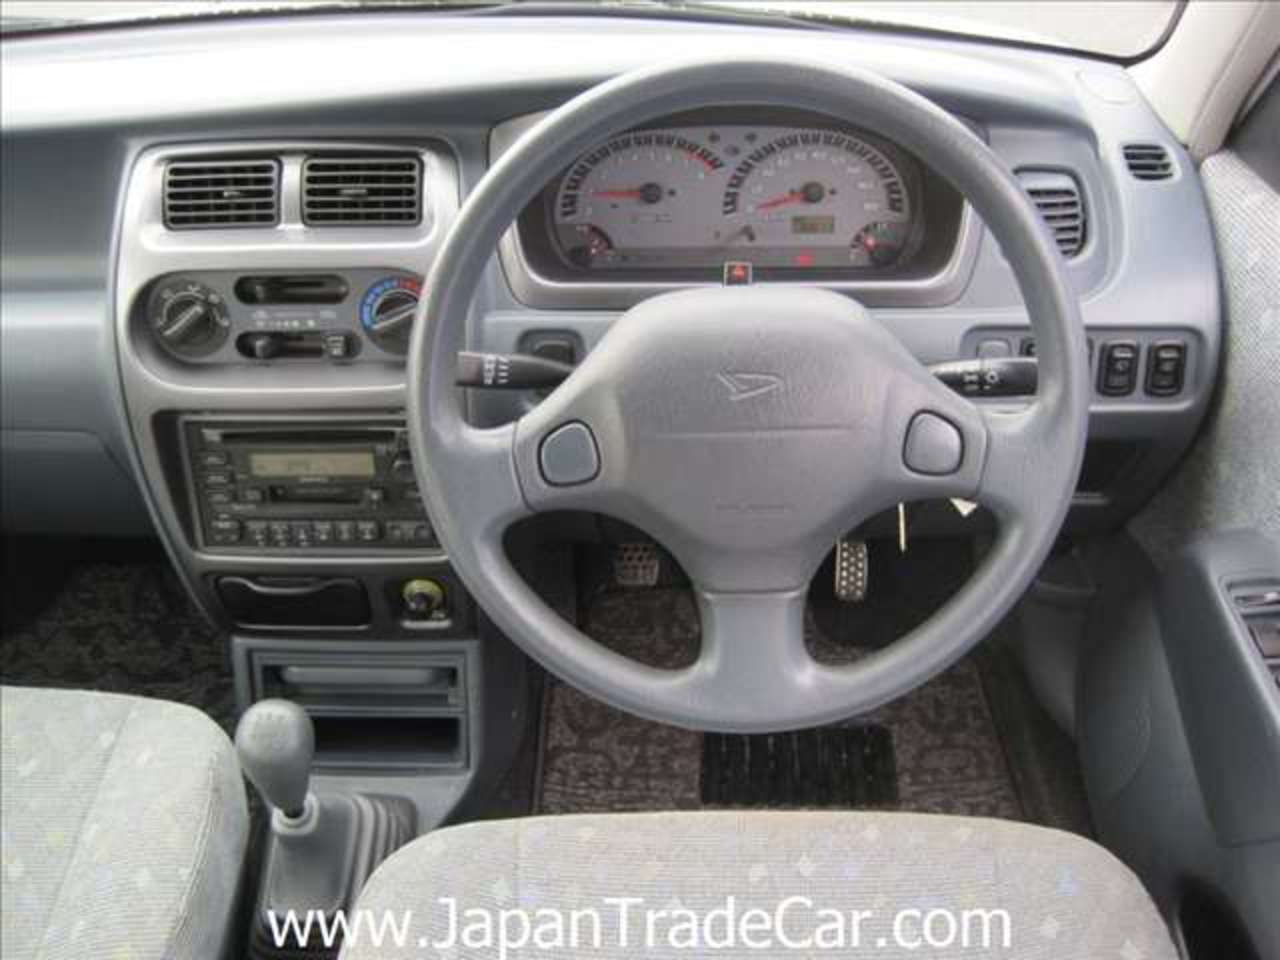 Daihatsu Storia d'occasion vendu au Japon Châssis M100S-020319 FOB...